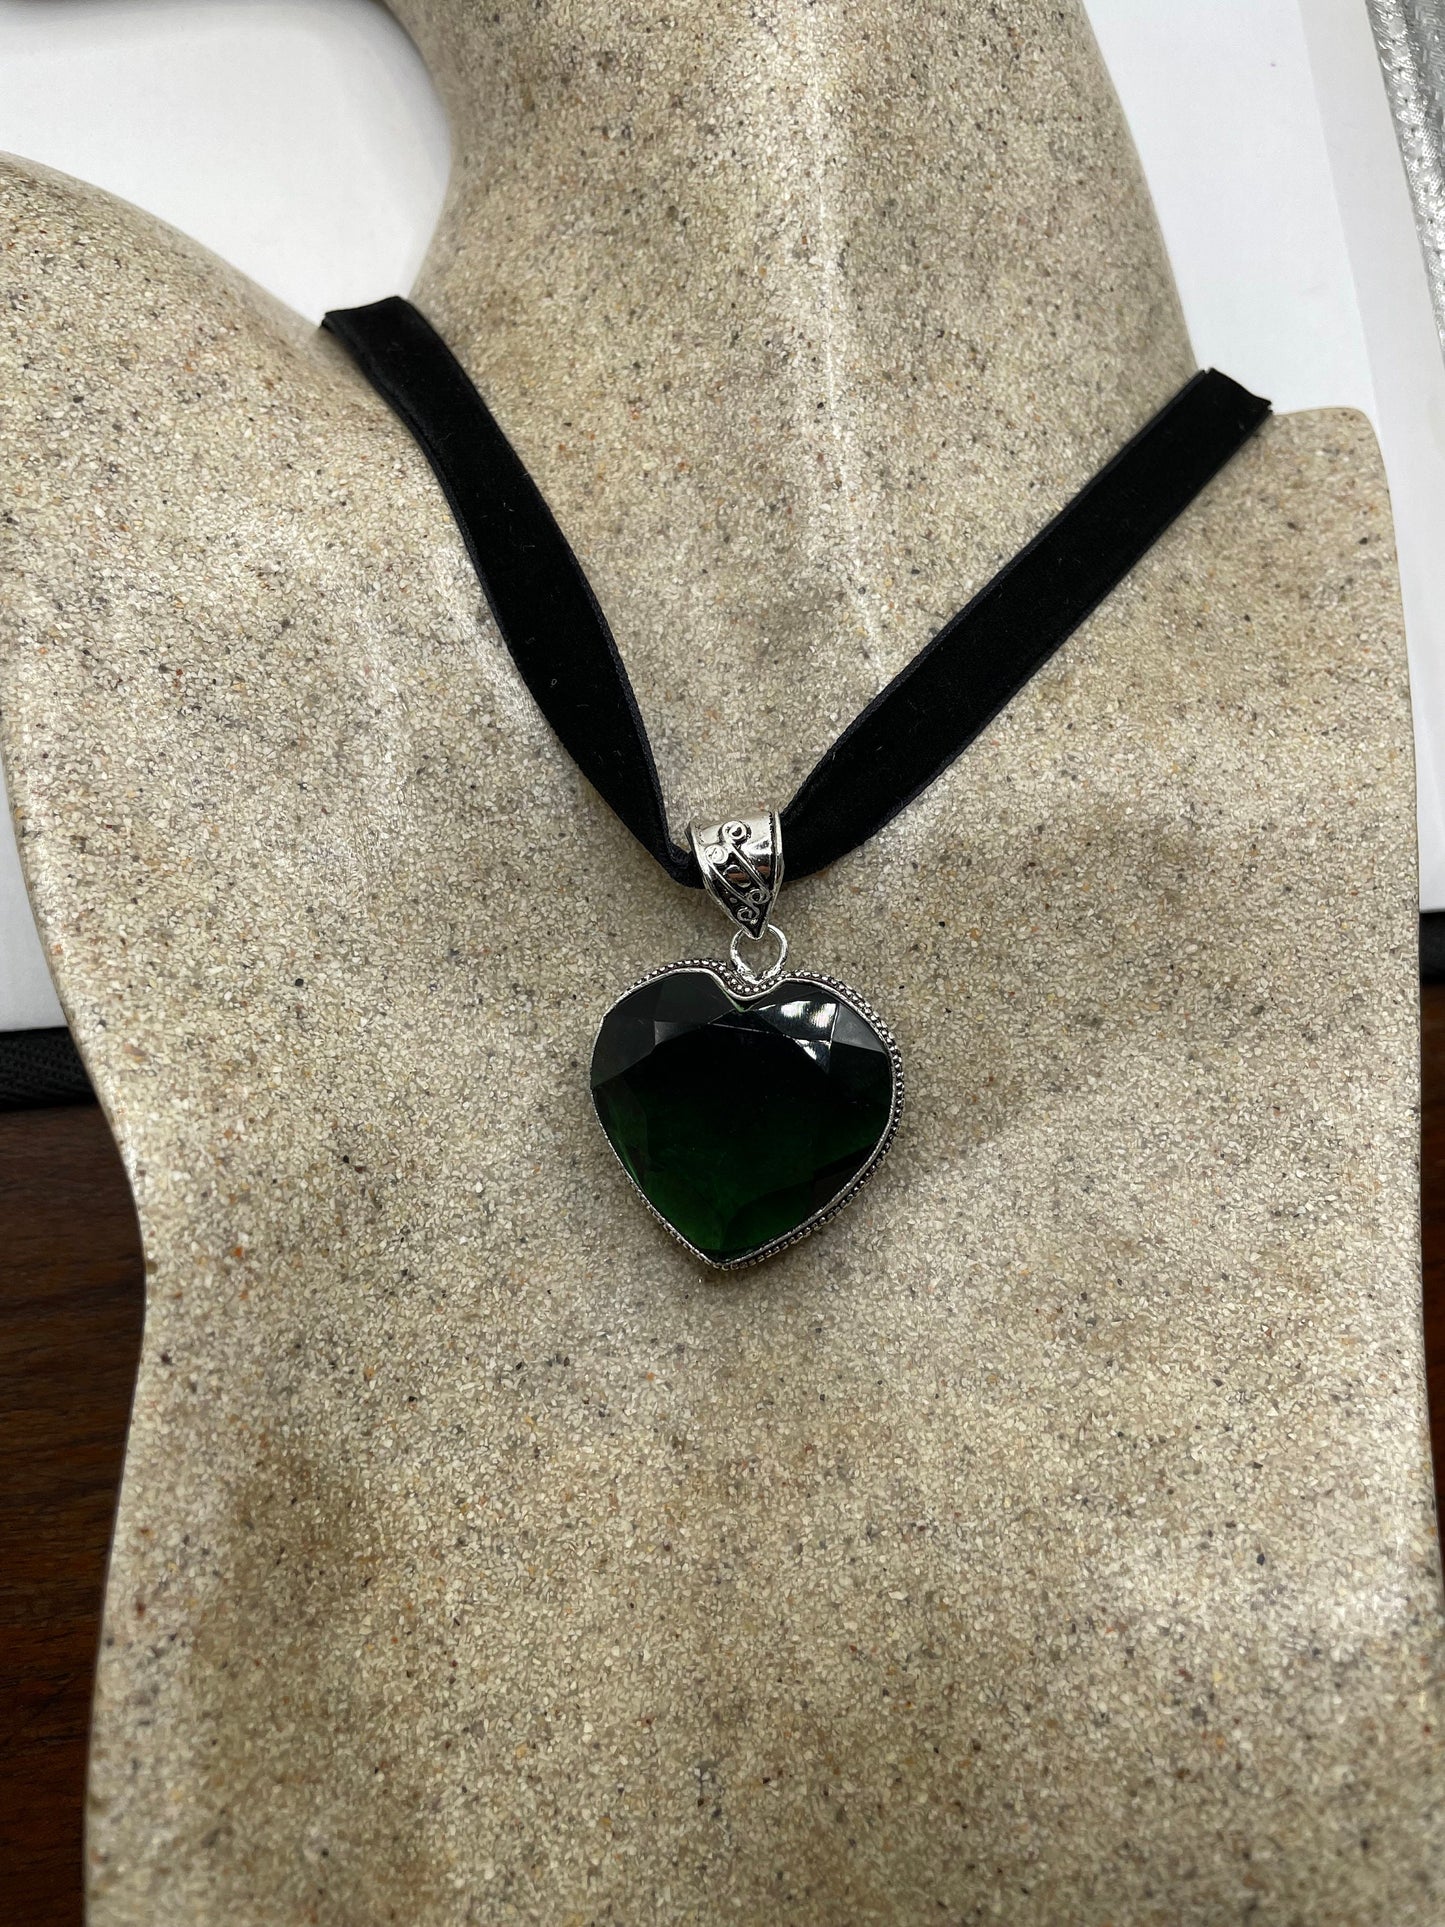 Vintage Heart Antique Green Emerald Glass Choker Necklace